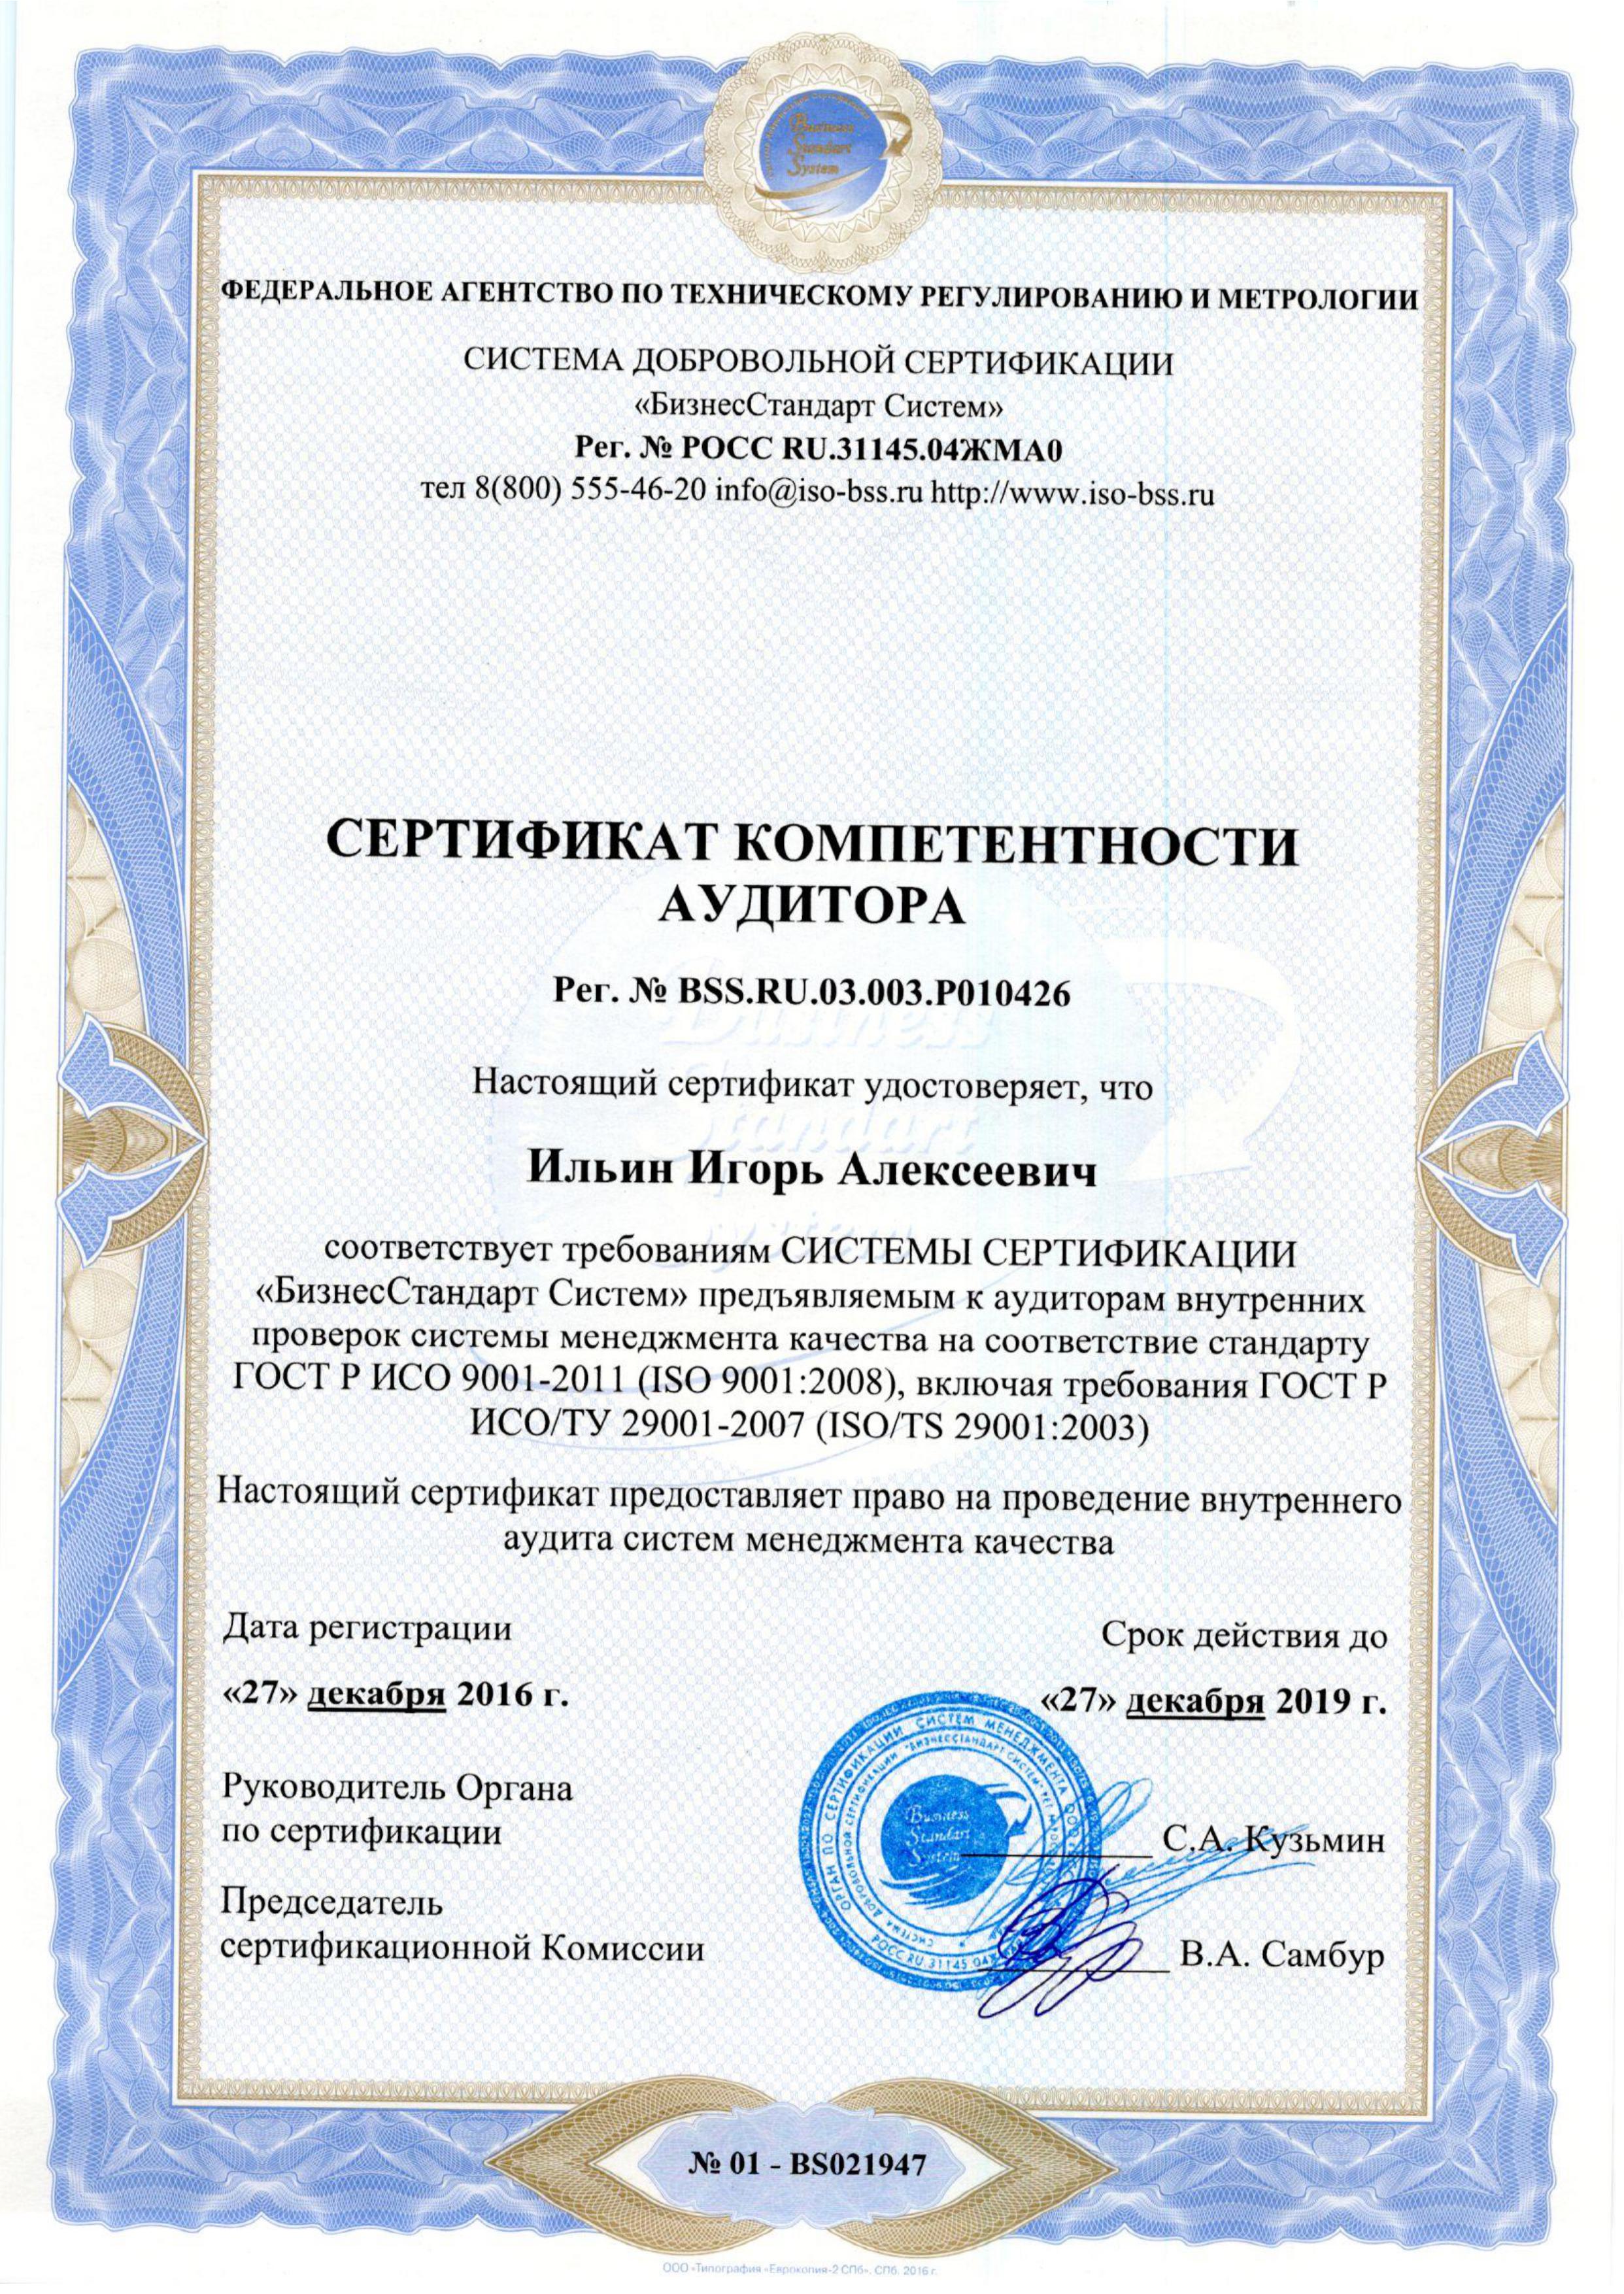 Сертификат компетенций. Сертификат компетентности. Сертификат ISO на аудитора. Сертификат аудитора СМК. Сертификат аудитора ISO 9001.